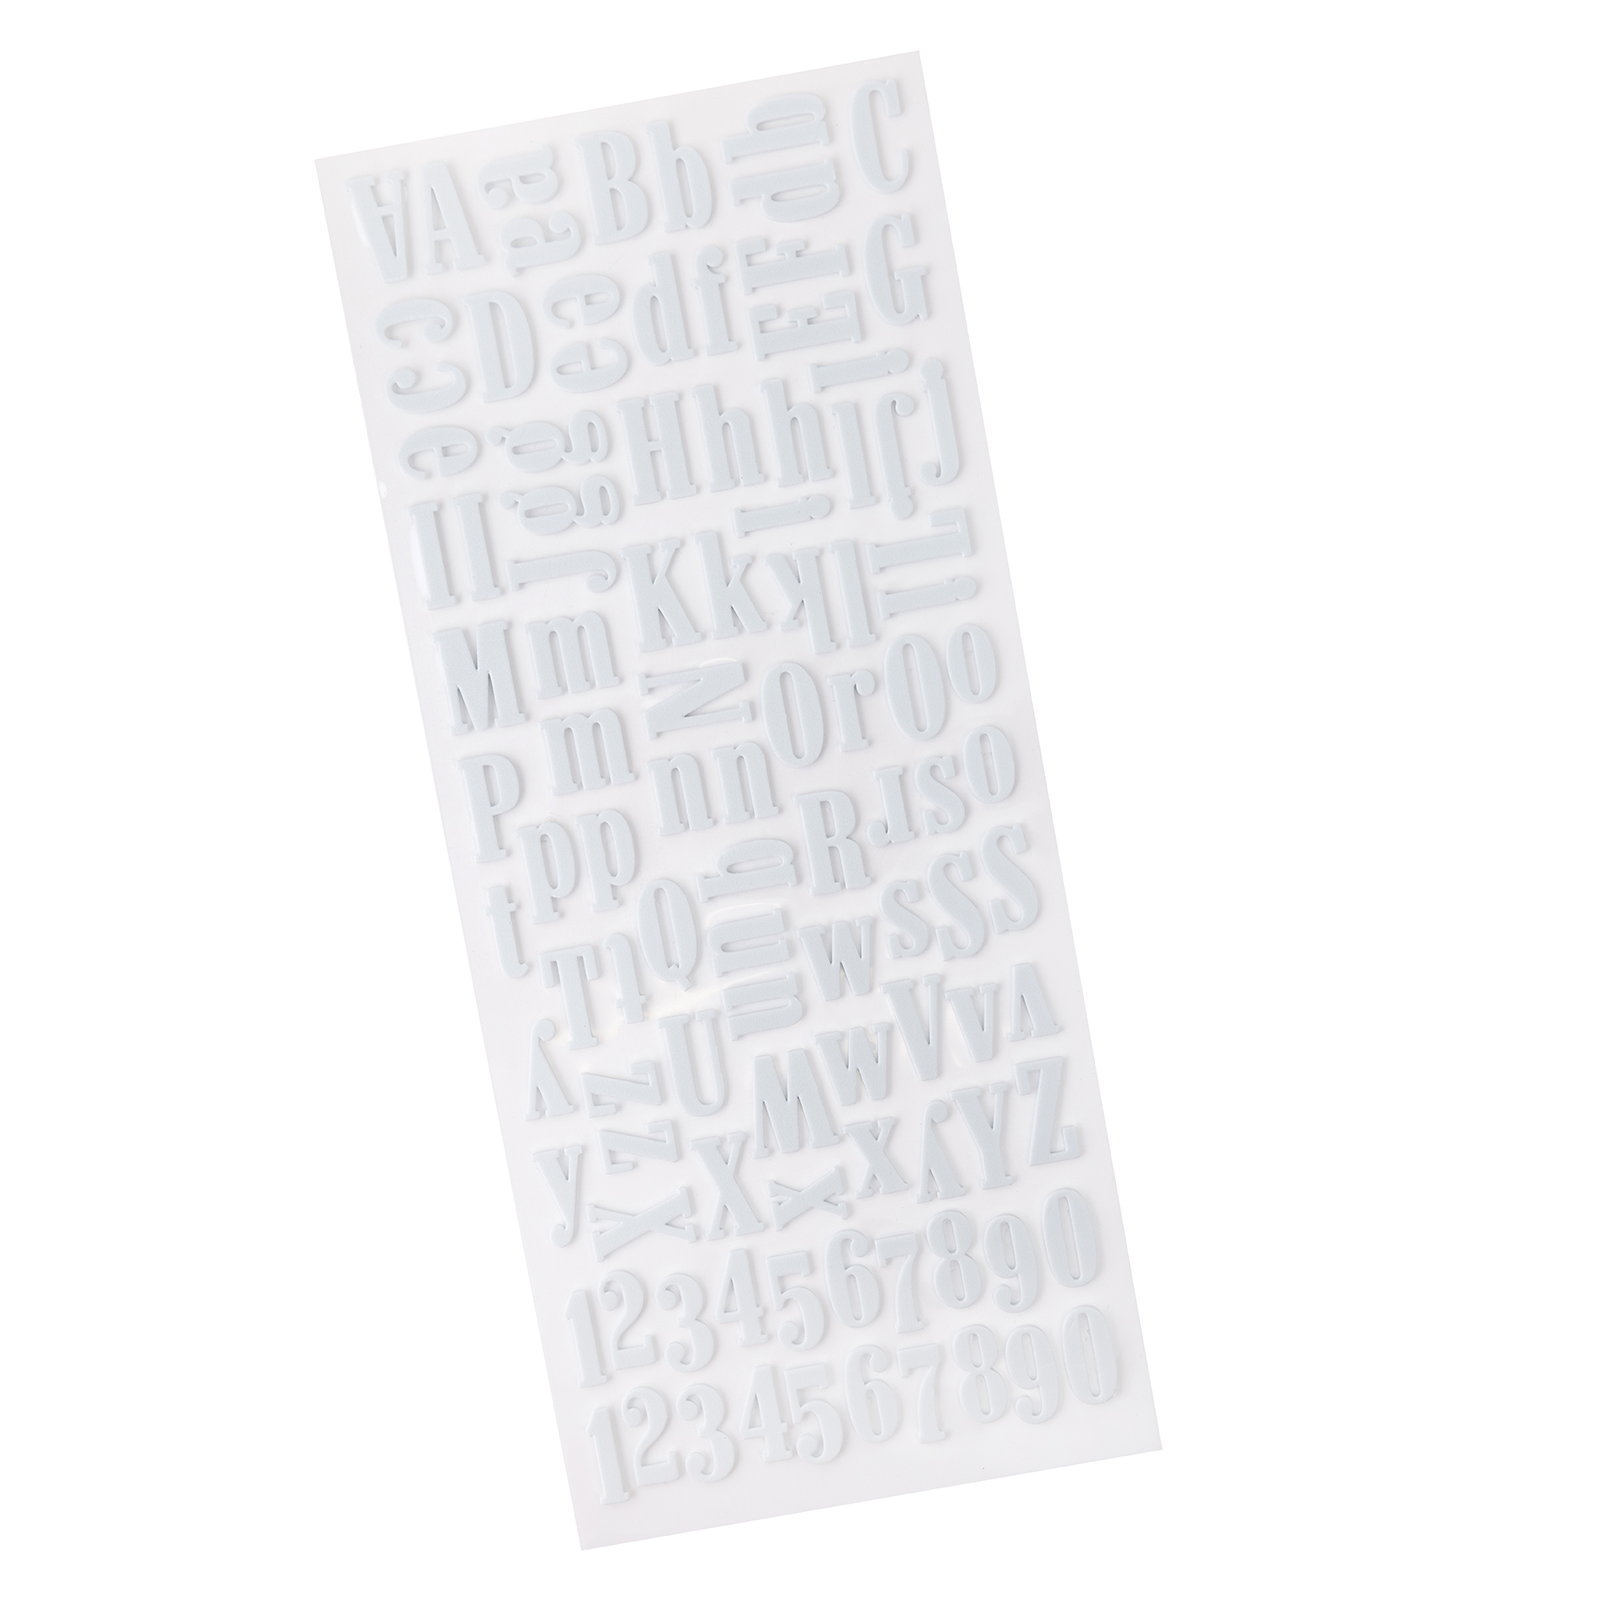 Sticko Large White Foam Alphabet Paper Stickers, 104 Piece